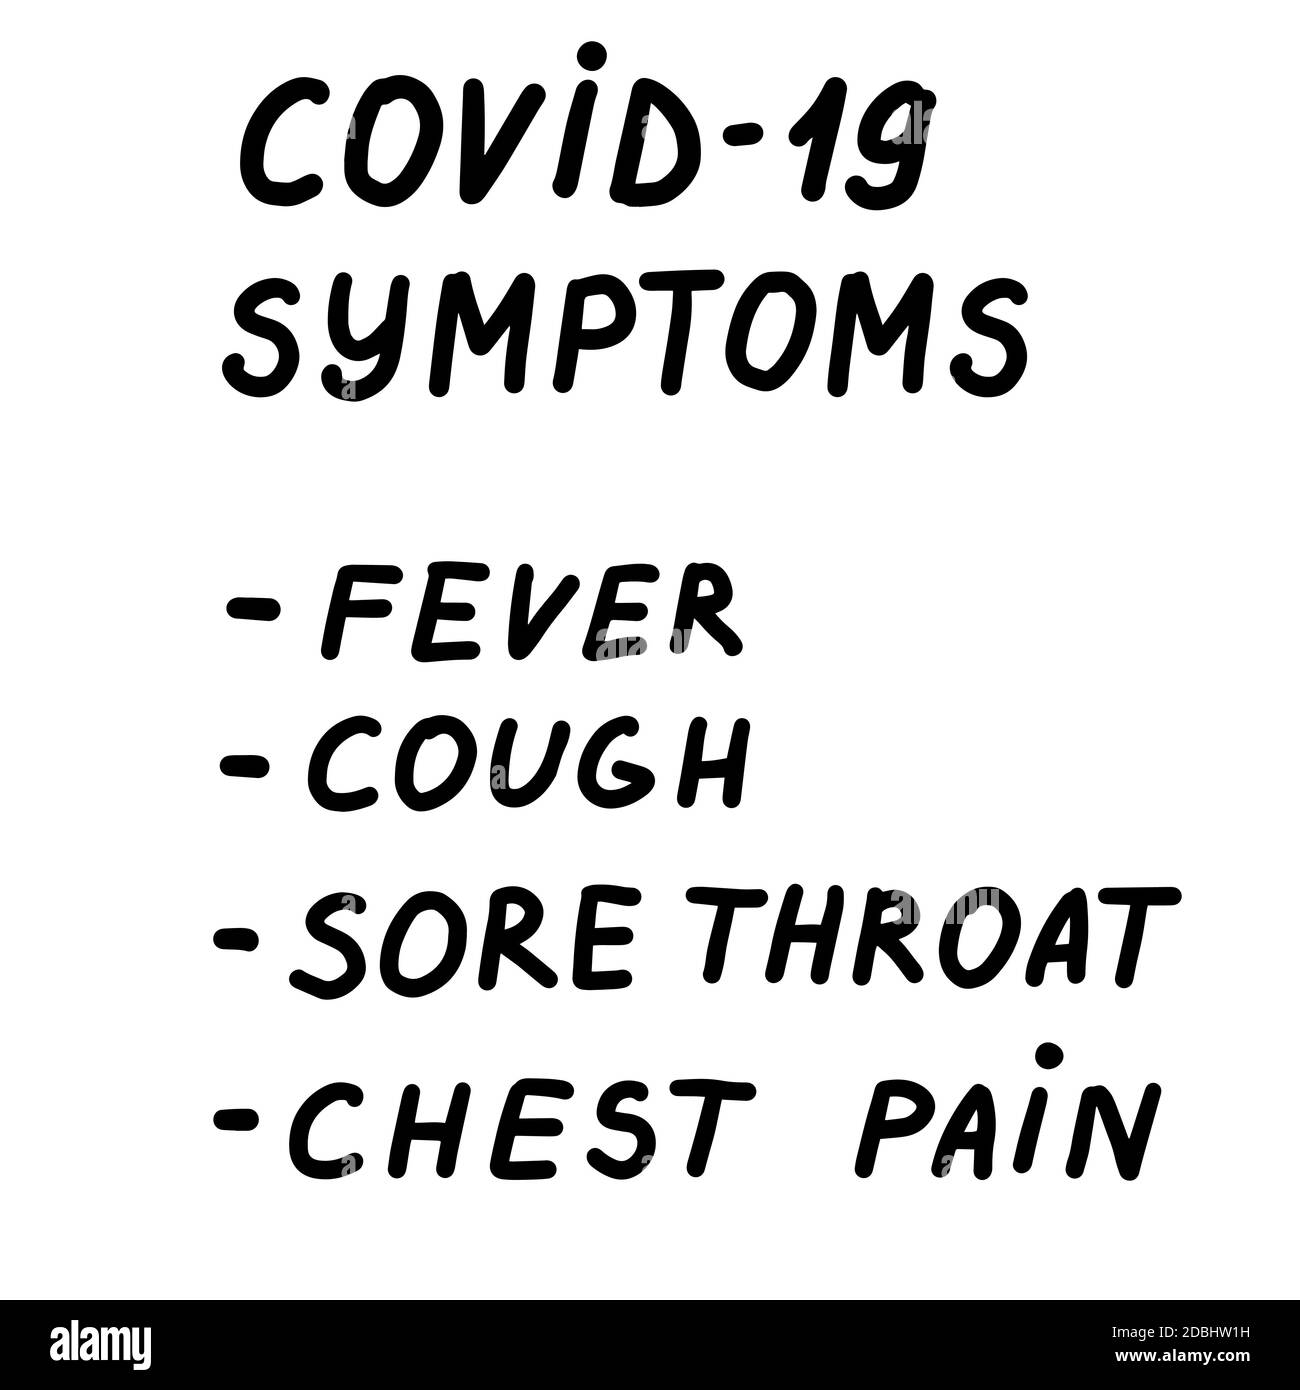 COVID-19-Symptome. Healthcare und Medizin Schriftzug. Signal des Coronavirus. Husten, Fieber, Halsschmerzen, Brustschmerzen. Vektor eps handgeschriebener Pinsel Stock Vektor